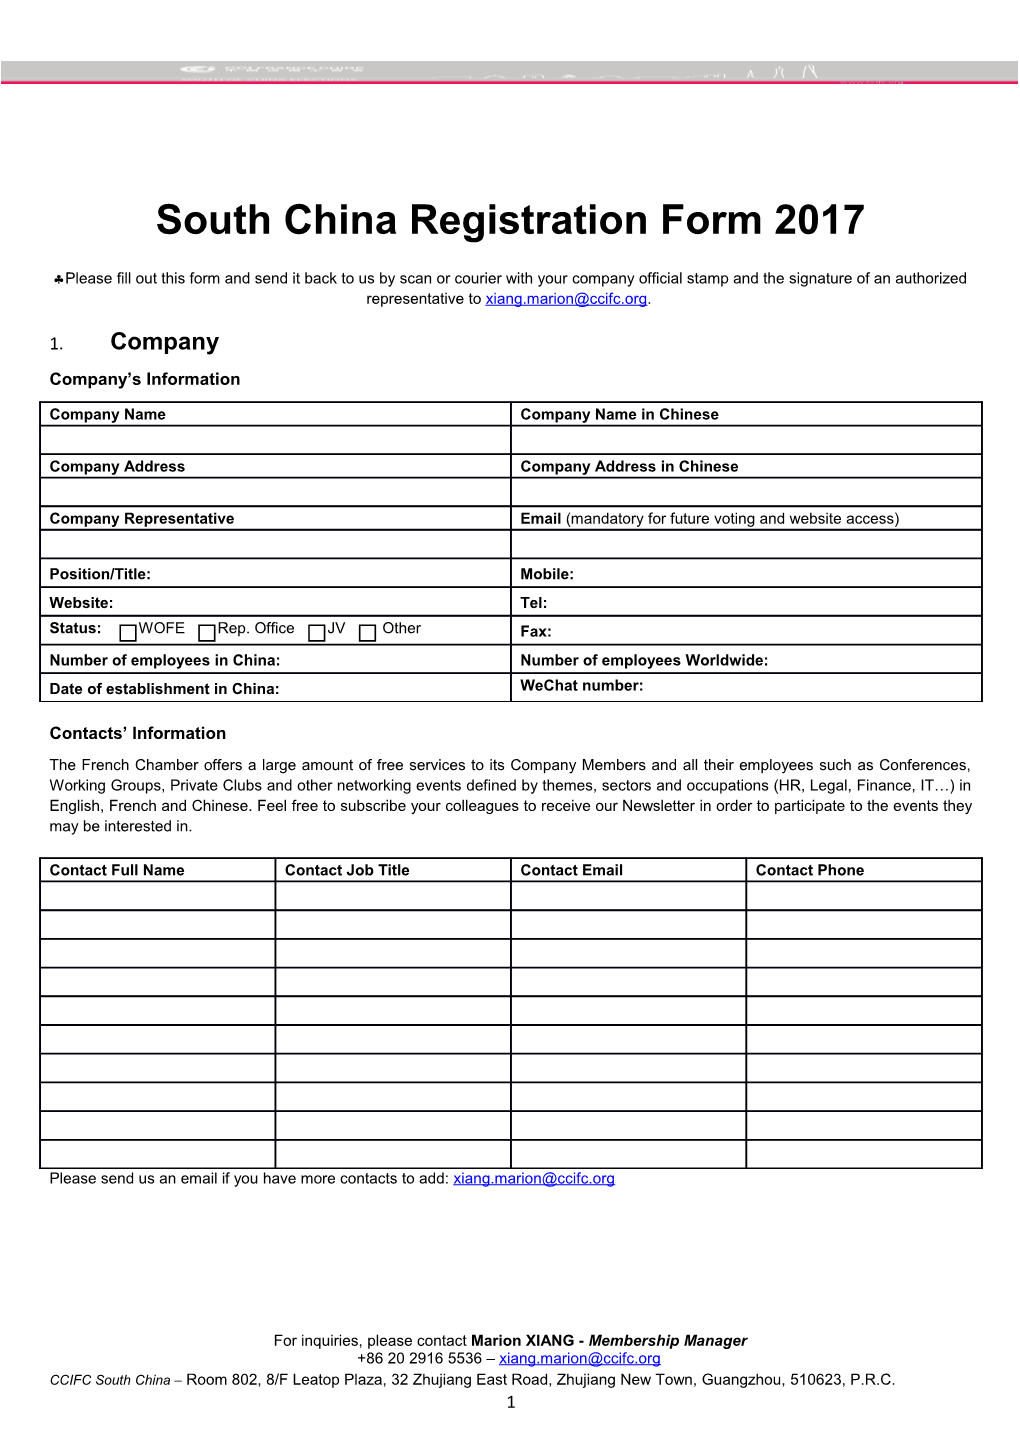 South China Registration Form 2017